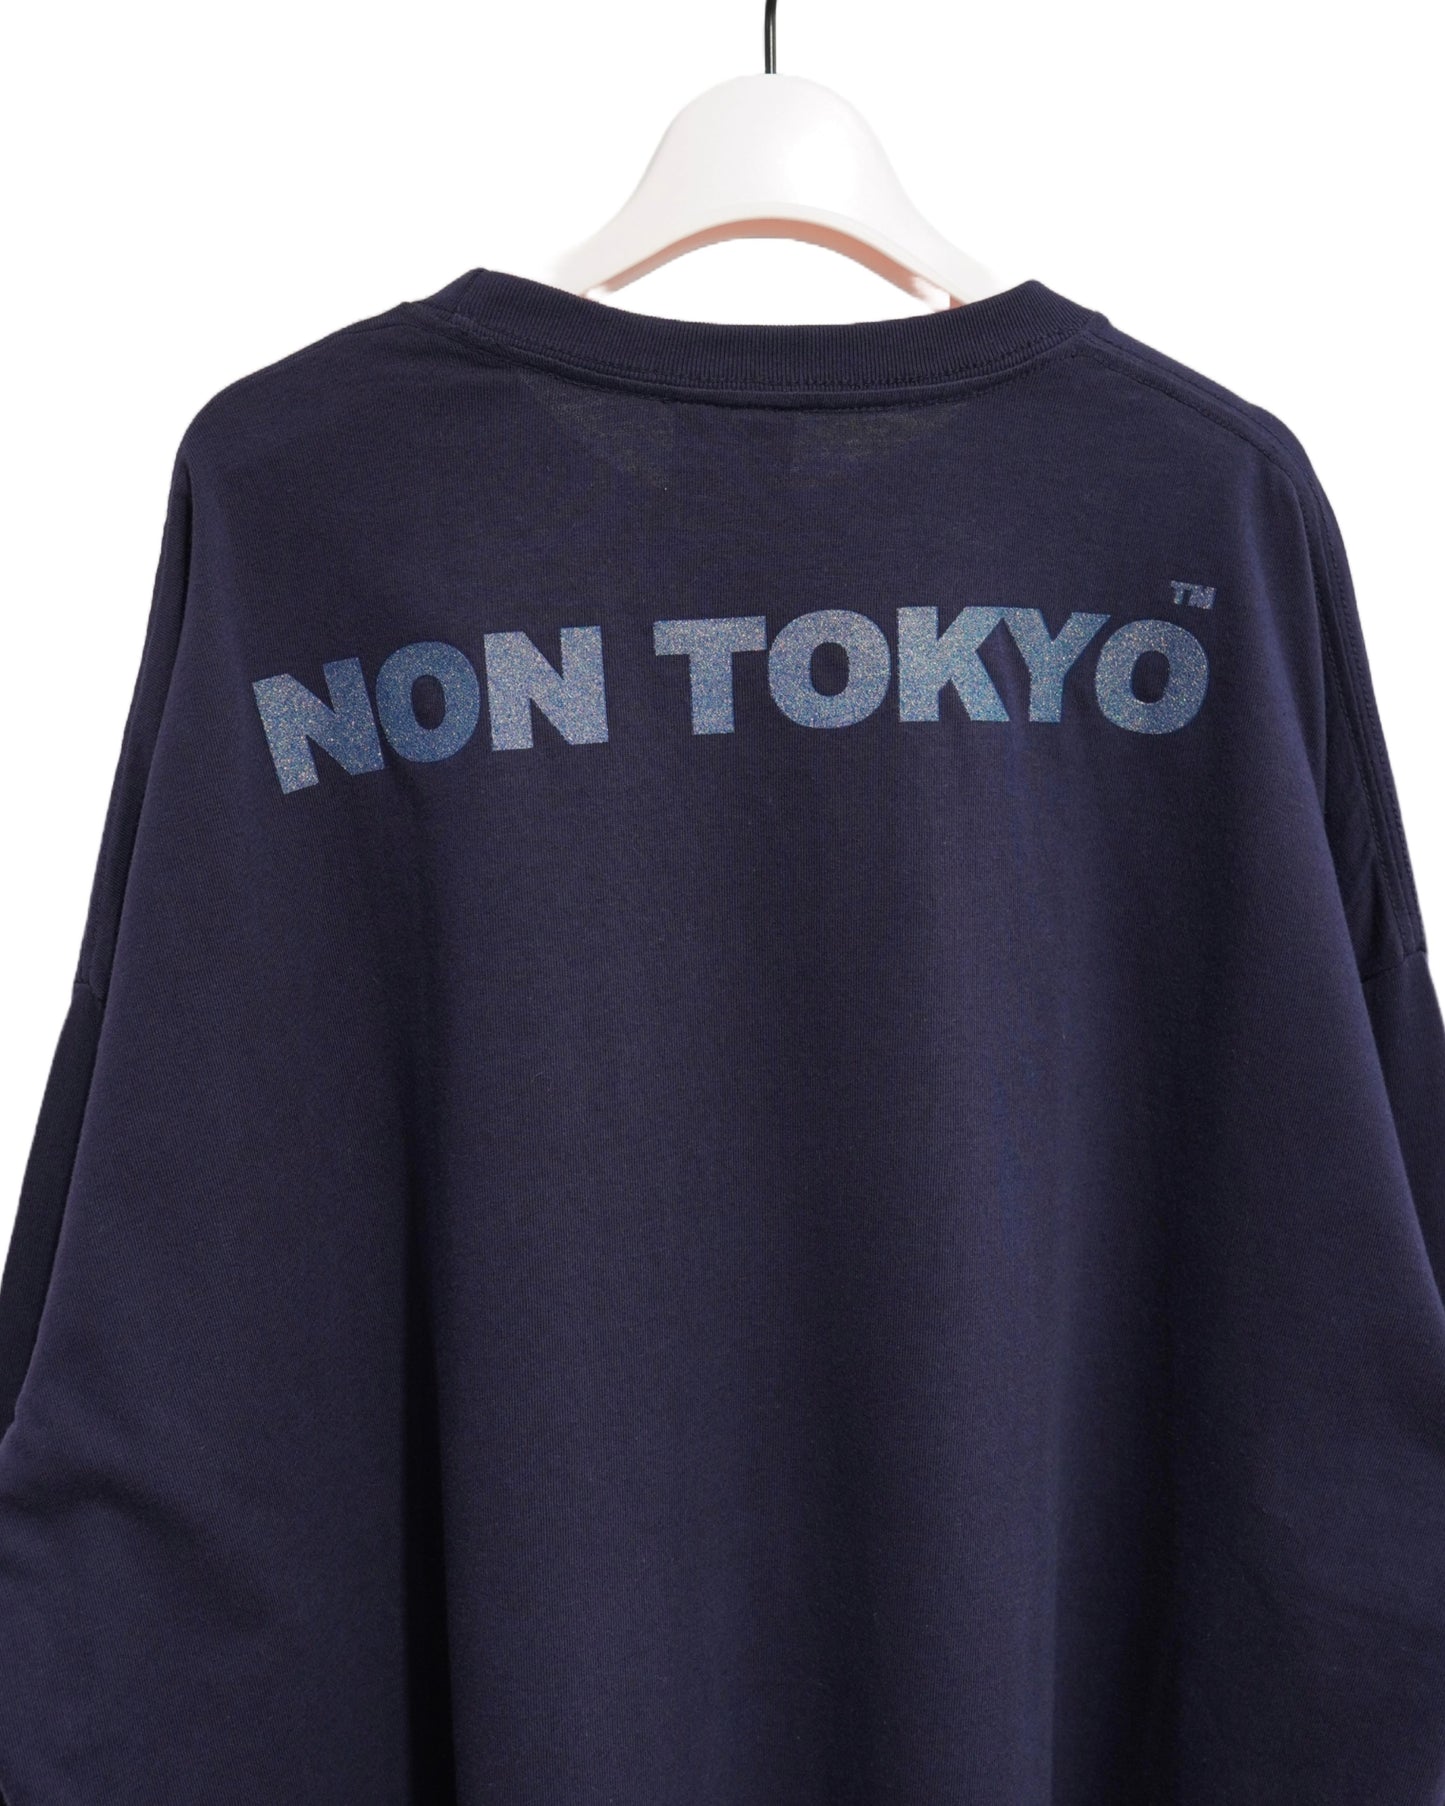 NON TOKYO / PRINT L/S T-SHIRT(HOUSE / NAVY) / 〈ノントーキョー〉プリントロングスリーブTシャツ (家 / ネイビー)